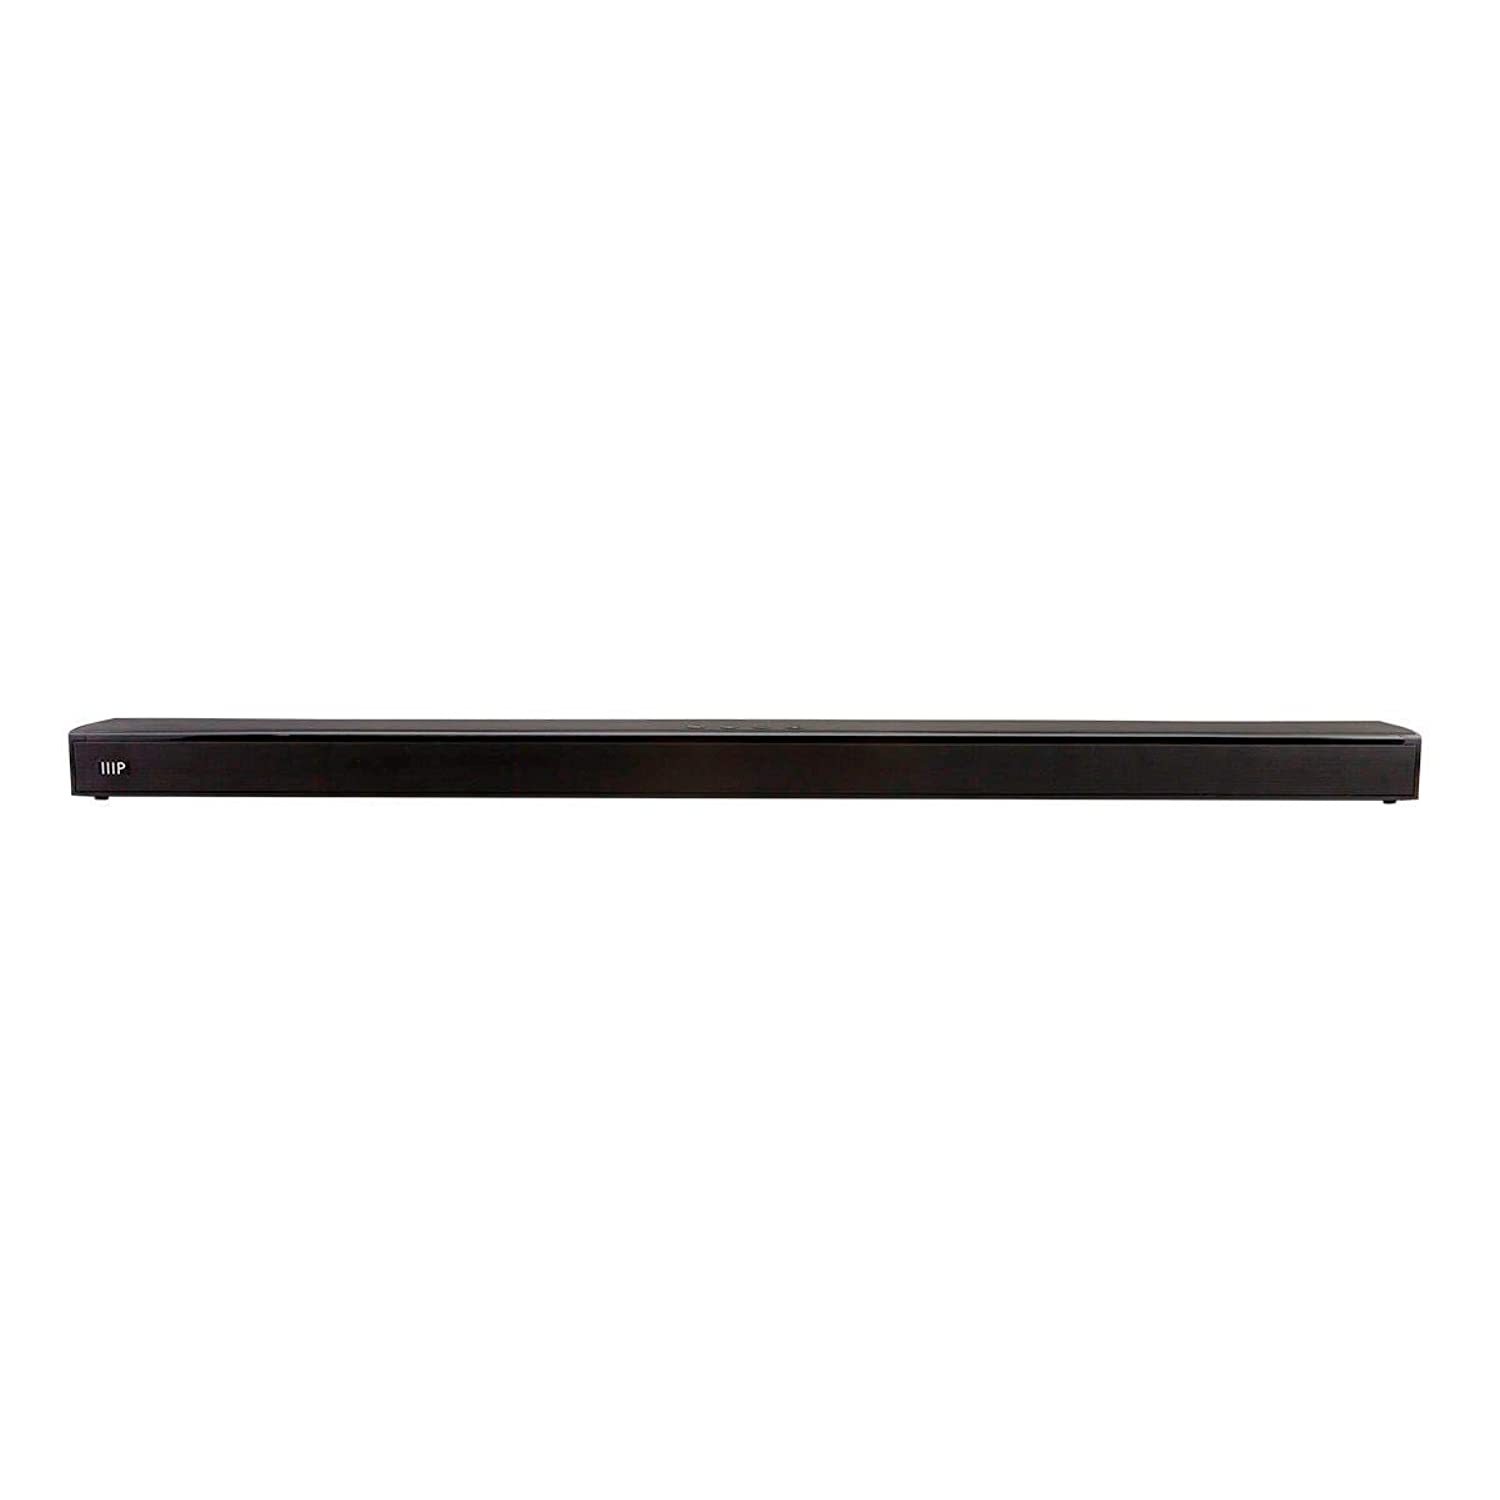 Monoprice SB-200 Premium Slim Soundbar - Black with HDMI ARC, Bluetooth, Optical - $135.99